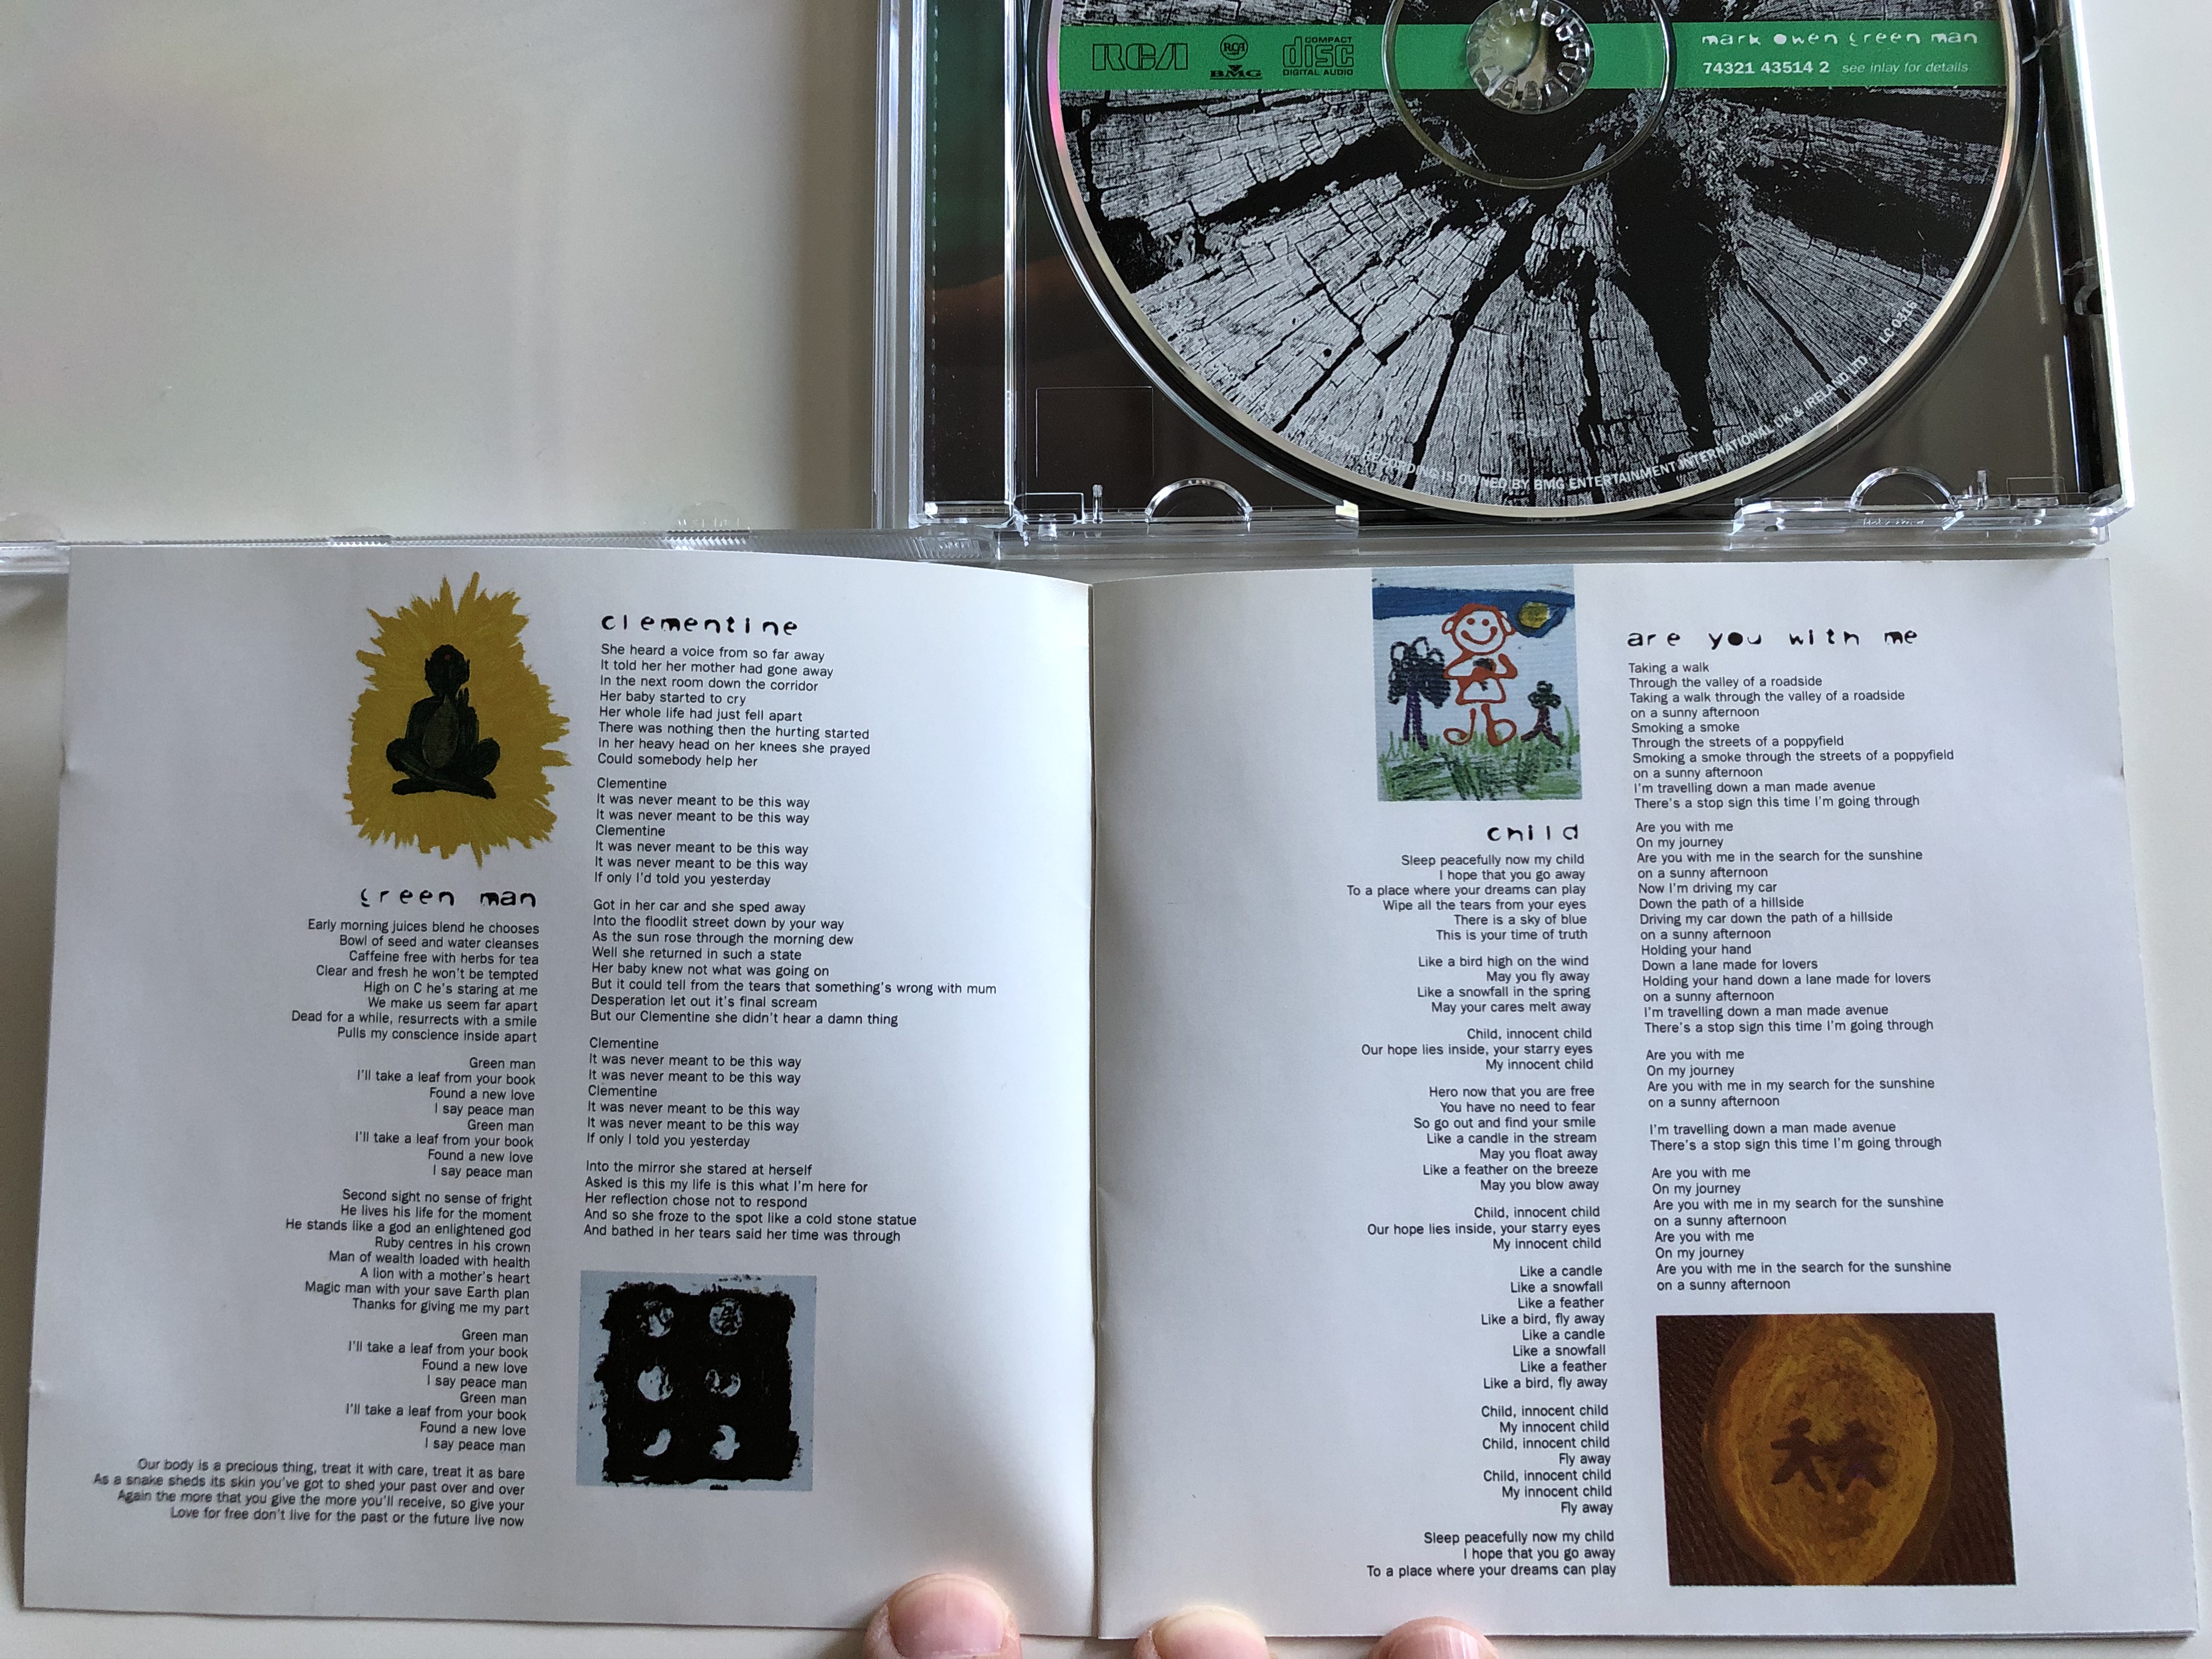 mark-owen-green-man-rca-audio-cd-1996-74321-43514-2-2-.jpg